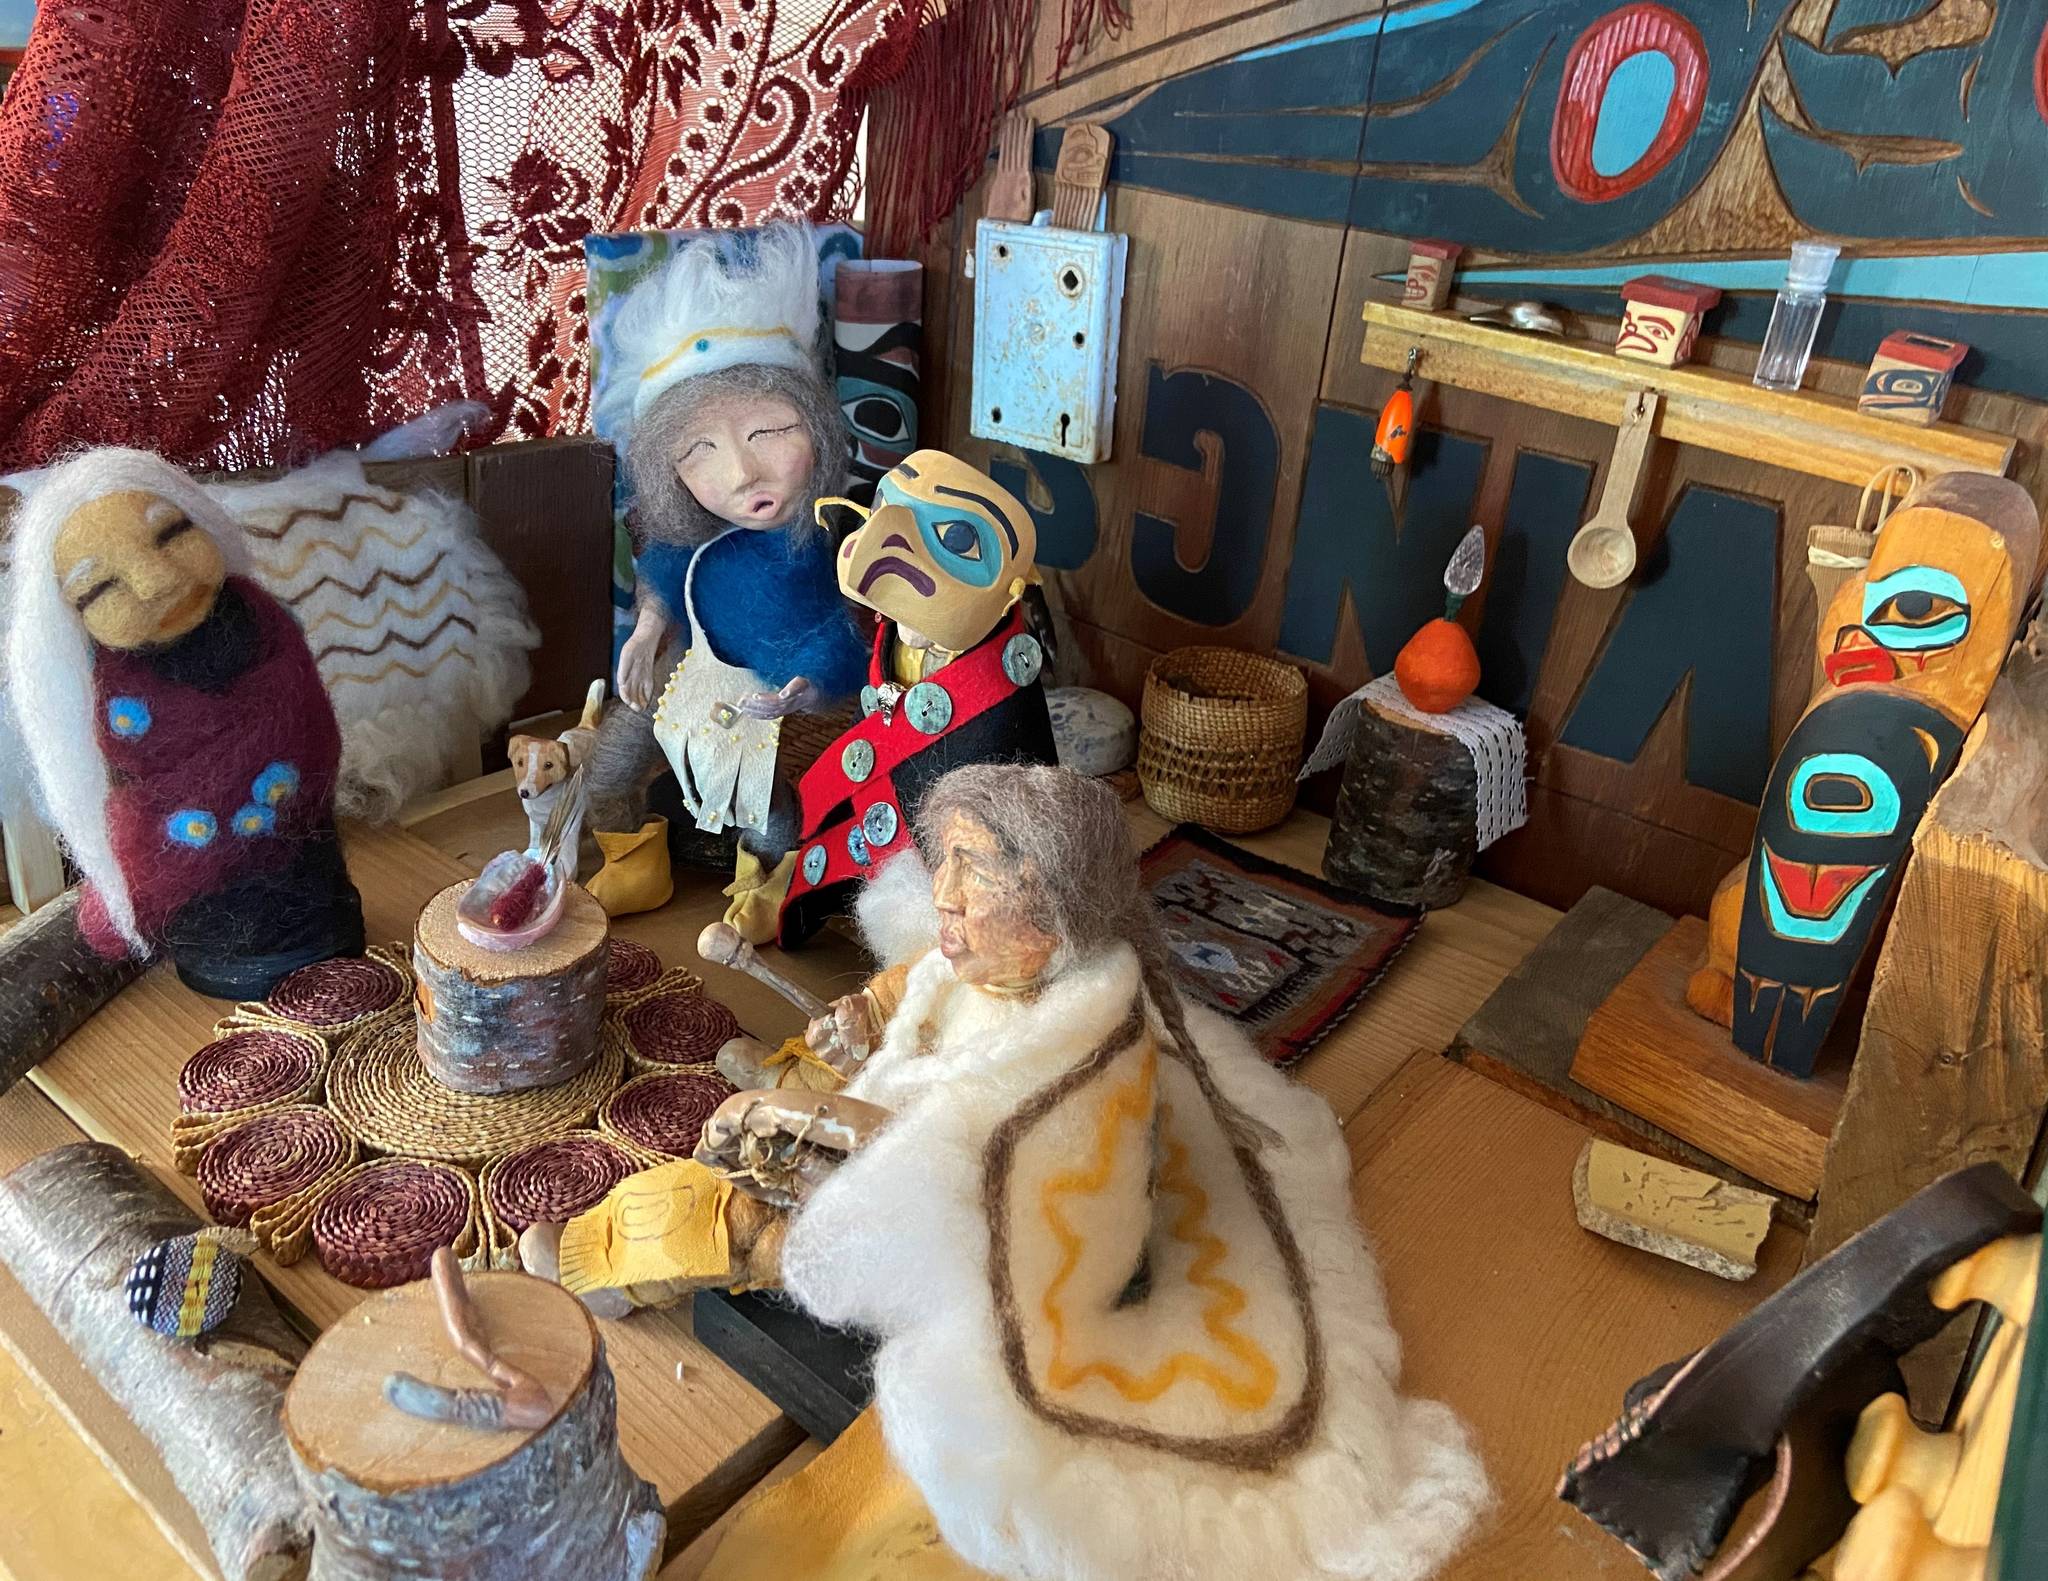 Diorama and dolls created by Kristina Cranston in her home studio located in Sitka. (Courtesy Photo/ Kristina Cranston)